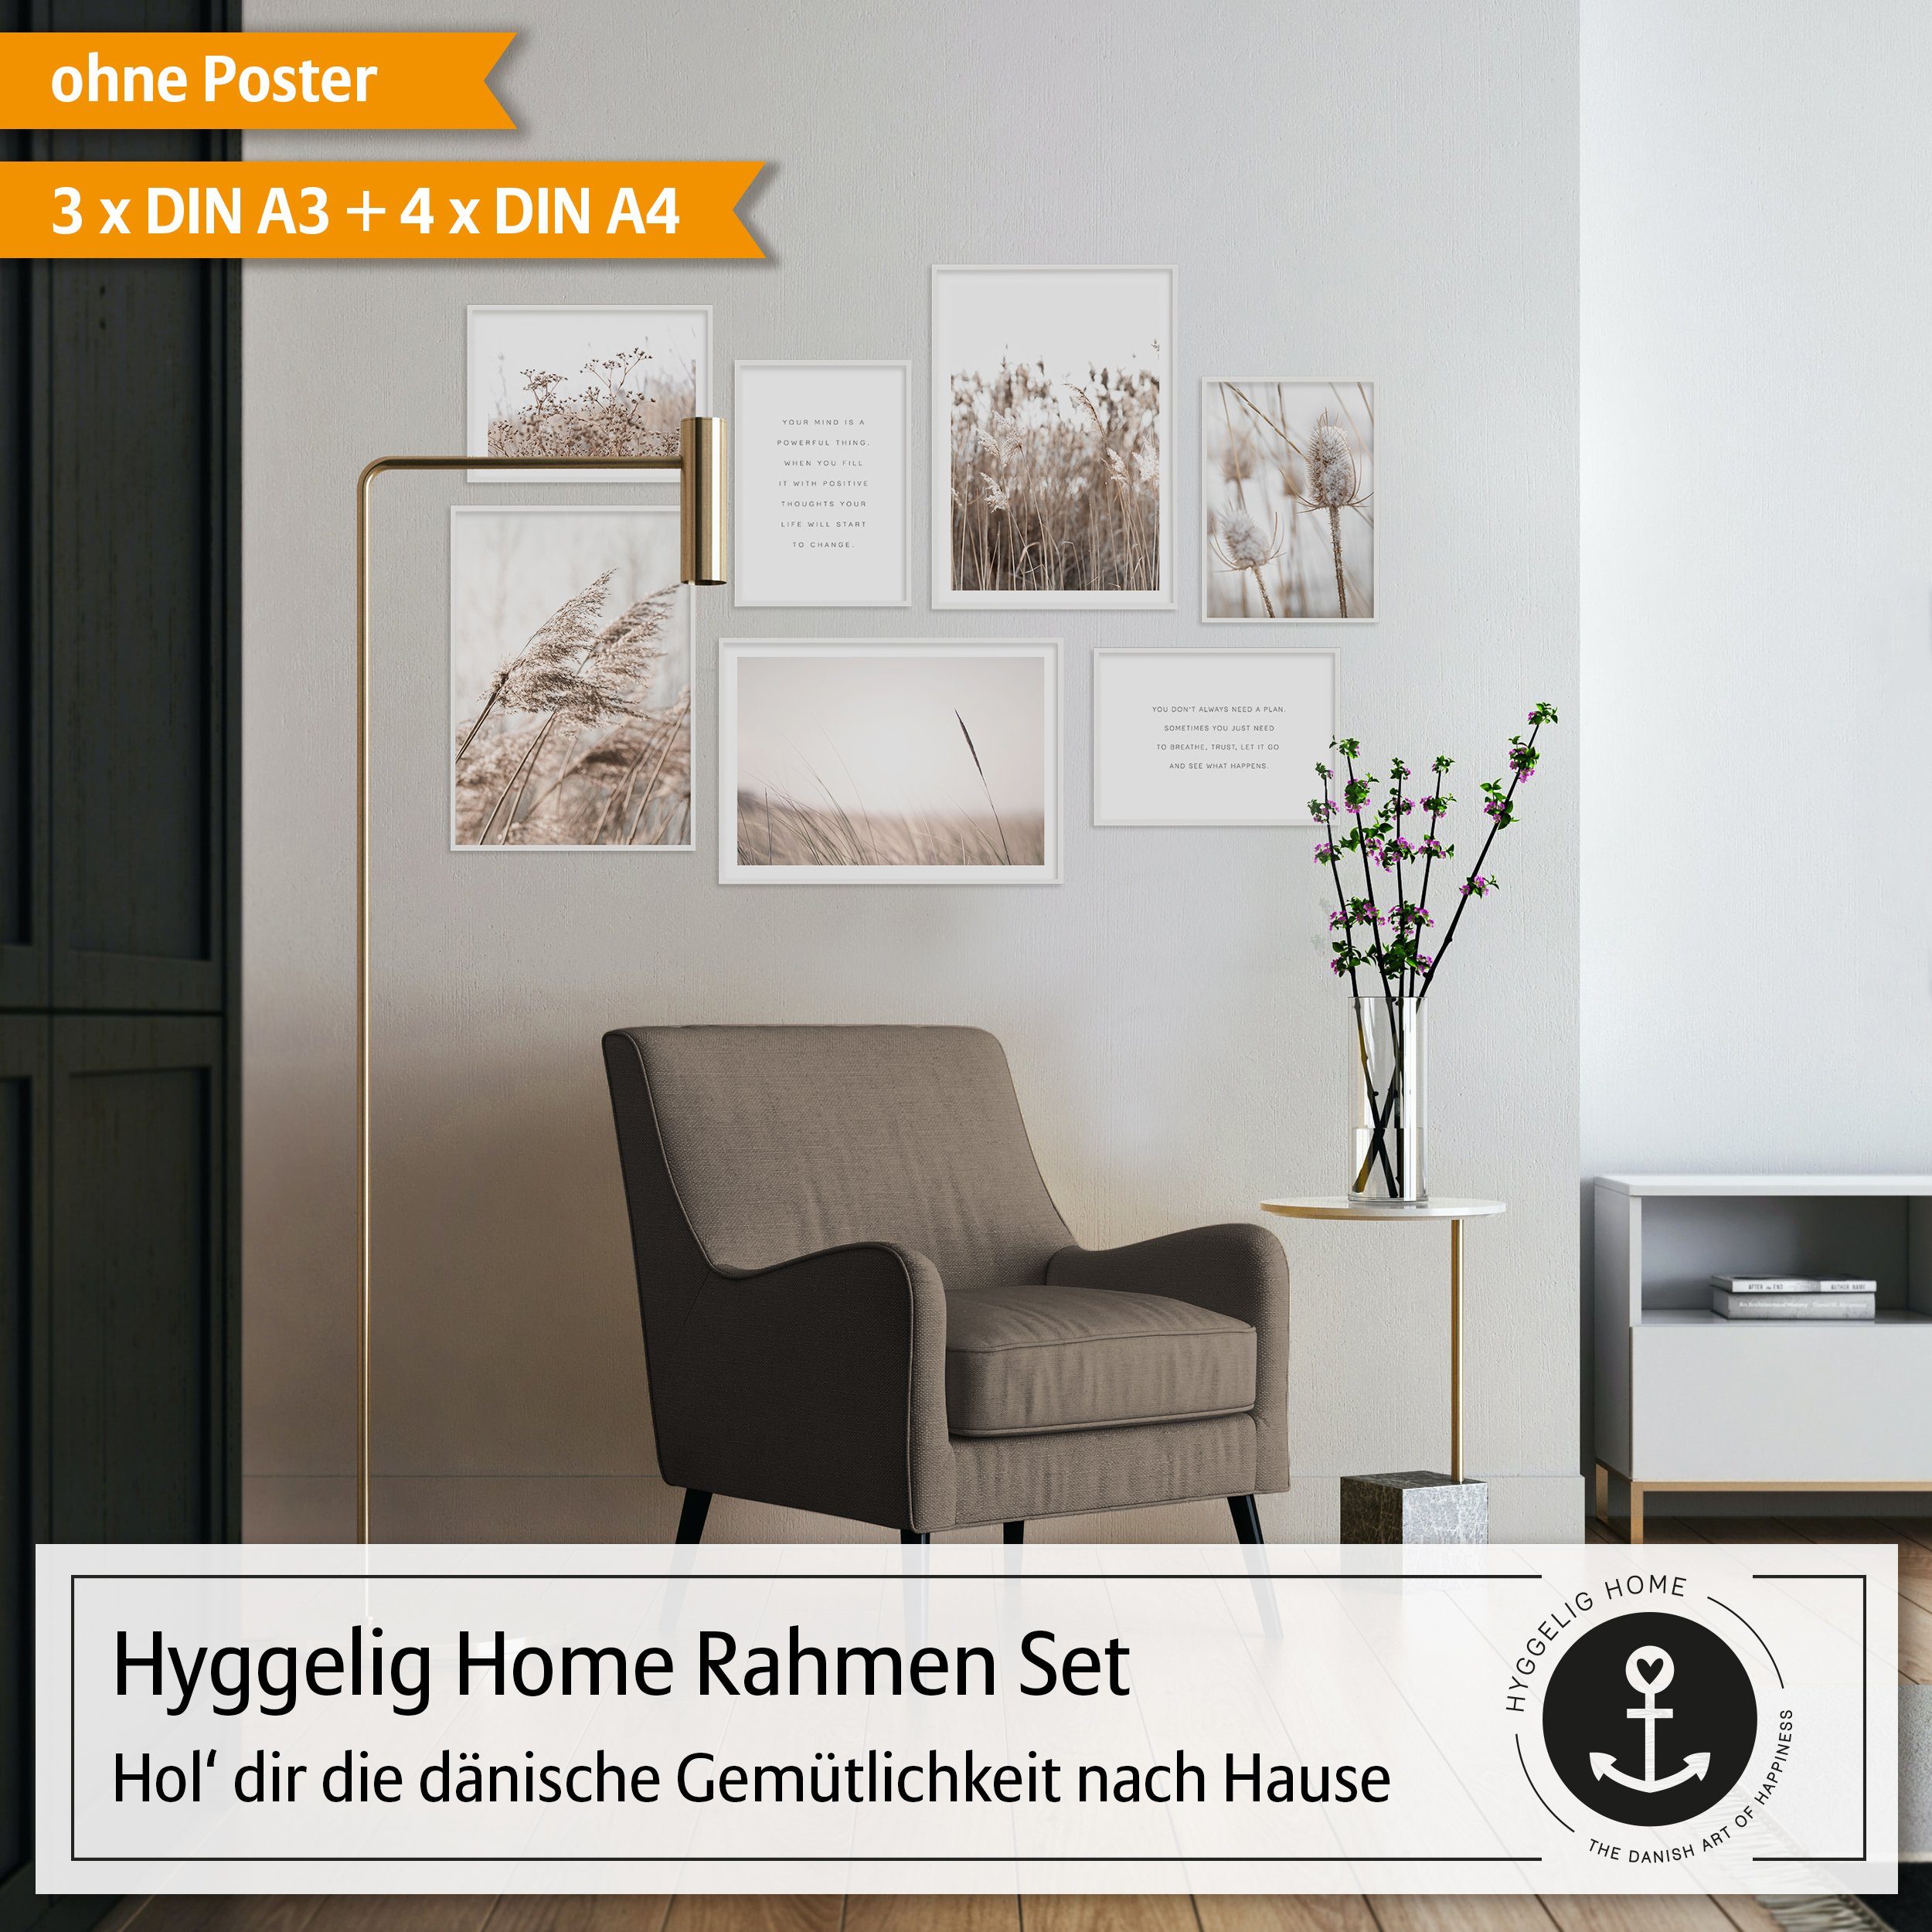 Hyggelig Home Bilderrahmen-Set Premium Fotorahmen Holzbilderrahmen in 7 weiß – hochwertige Set